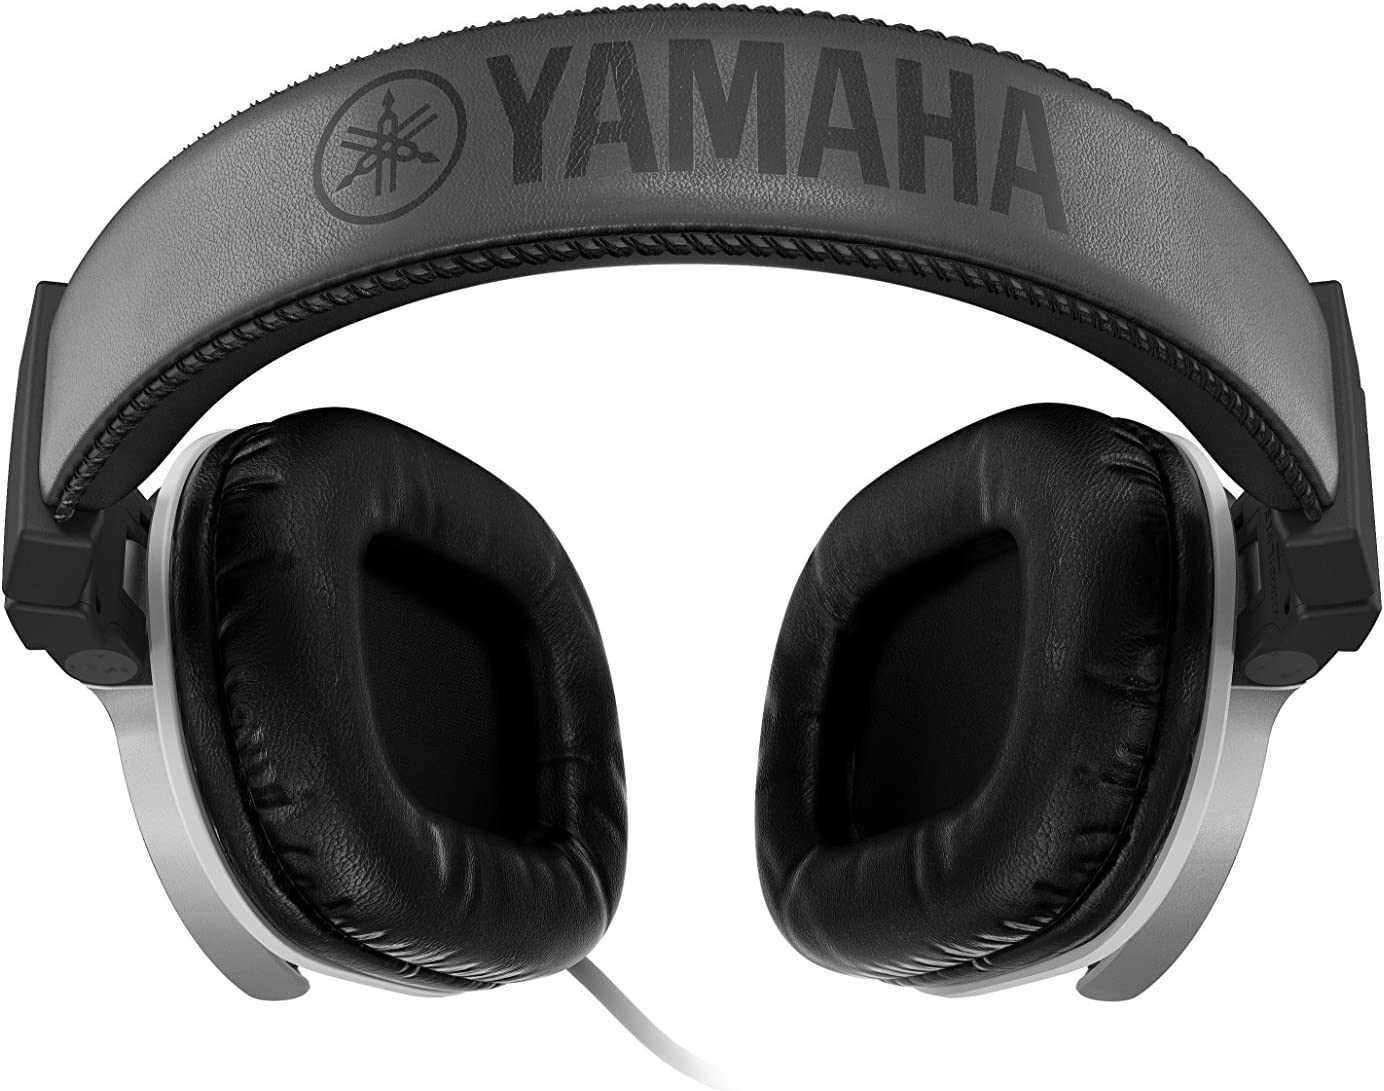 Yamaha HPH-MT5W Monitor Headphones, White